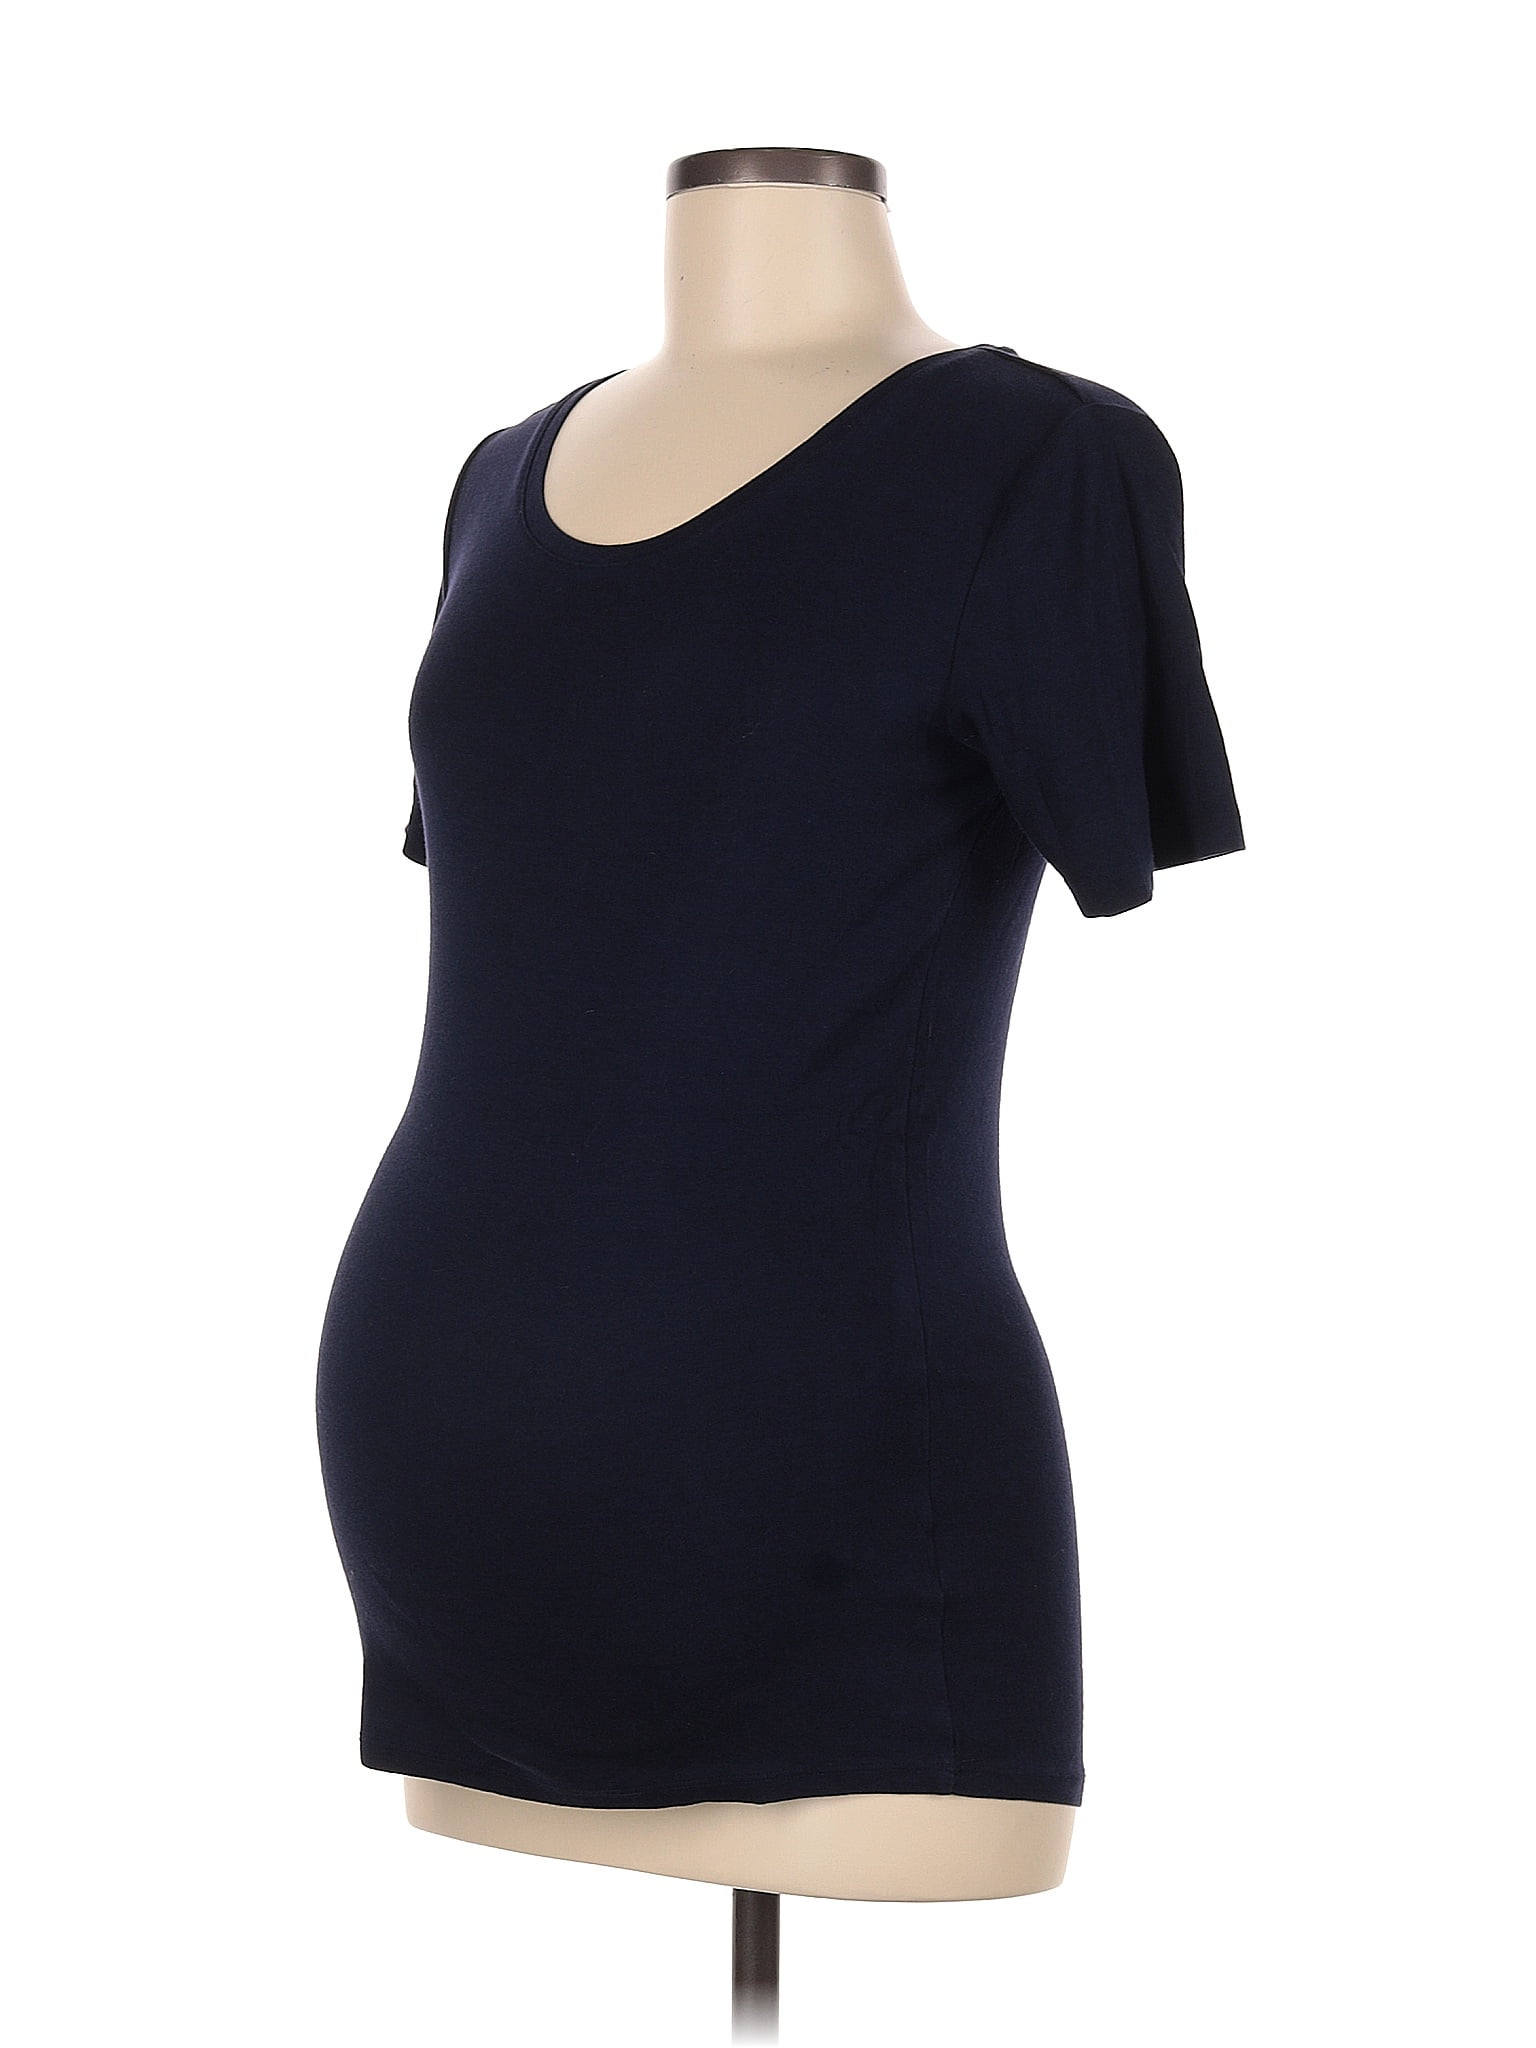 Gap - Maternity Polka Dots Blue Short Sleeve T-Shirt Size M